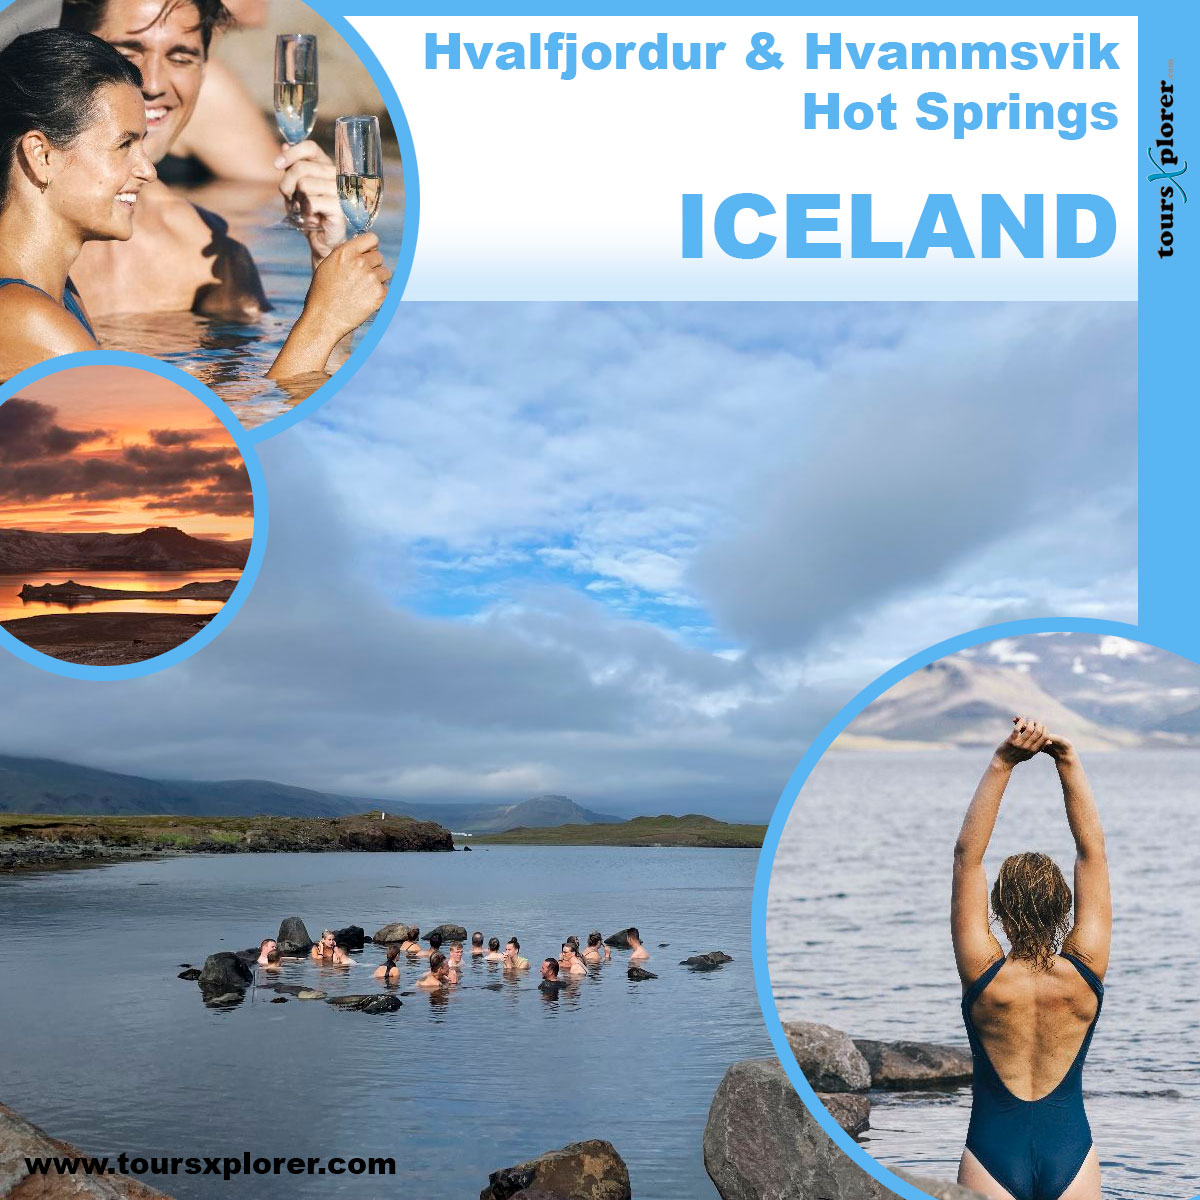 Hvalfjordur & Hvammsvik Hot Springs

#ToursXplorer #Iceland #Hiking #MountEsja #Reykjavik #Travel #Adventure #Explore #Nature #Scenery #Tourism #Vacation #Holiday #Getaway #Wanderlust #Travelgram #Instatravel #Traveling #Traveler #TravelPhotography

toursxplorer.com/tour/hike-to-m…